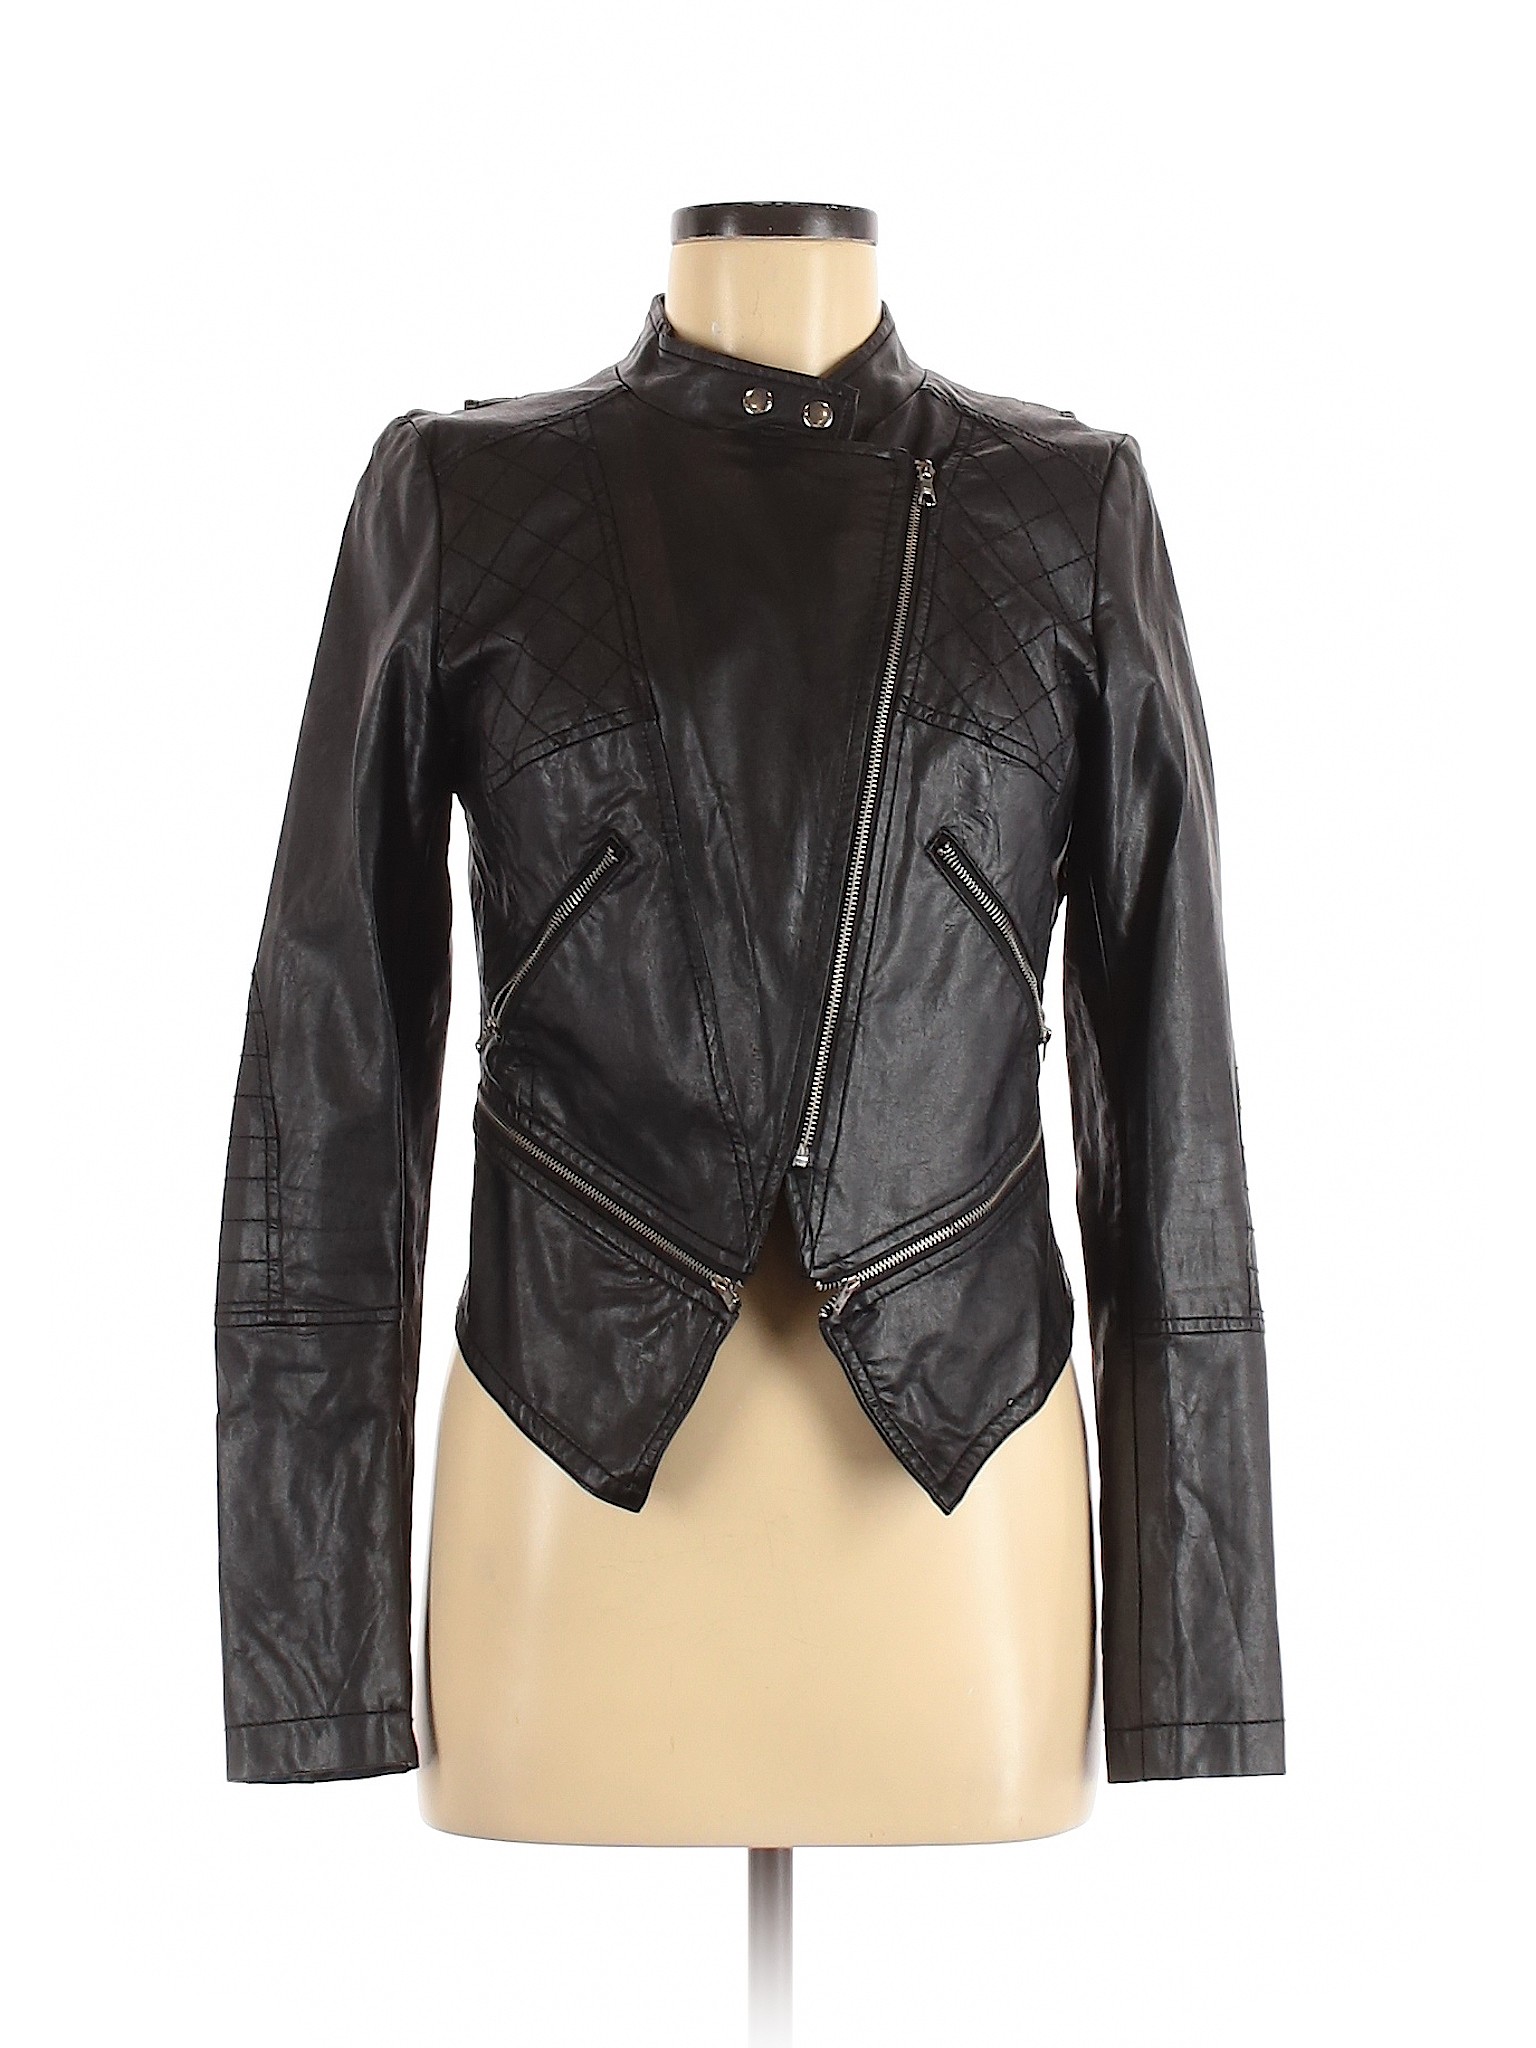 L'Amour Nanette Lepore Women Black Faux Leather Jacket M | eBay